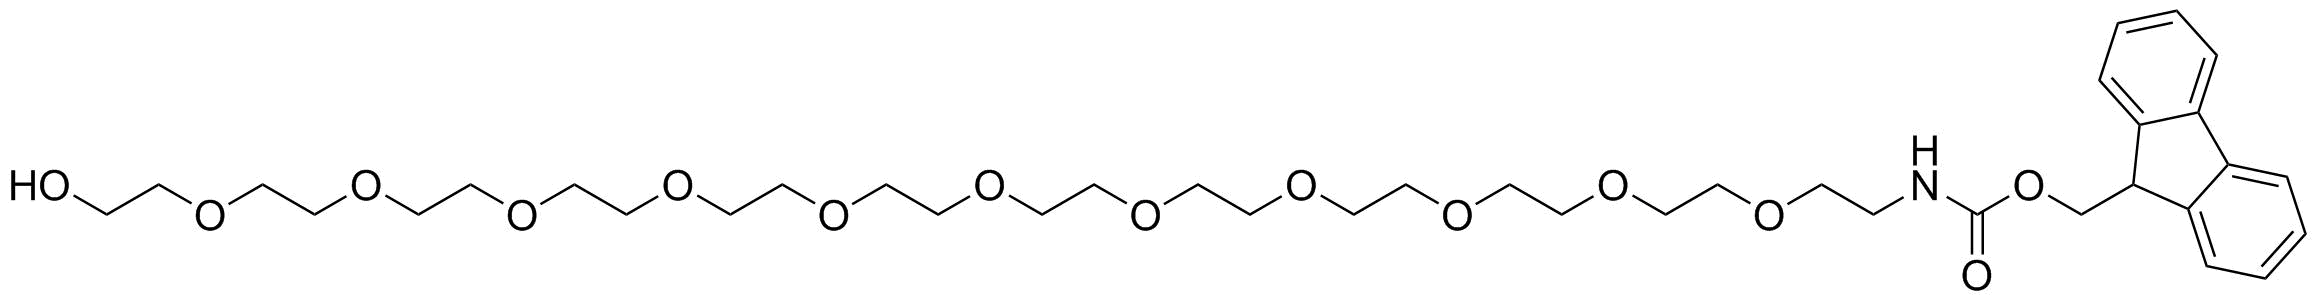 Fmoc-PEG12-alcohol